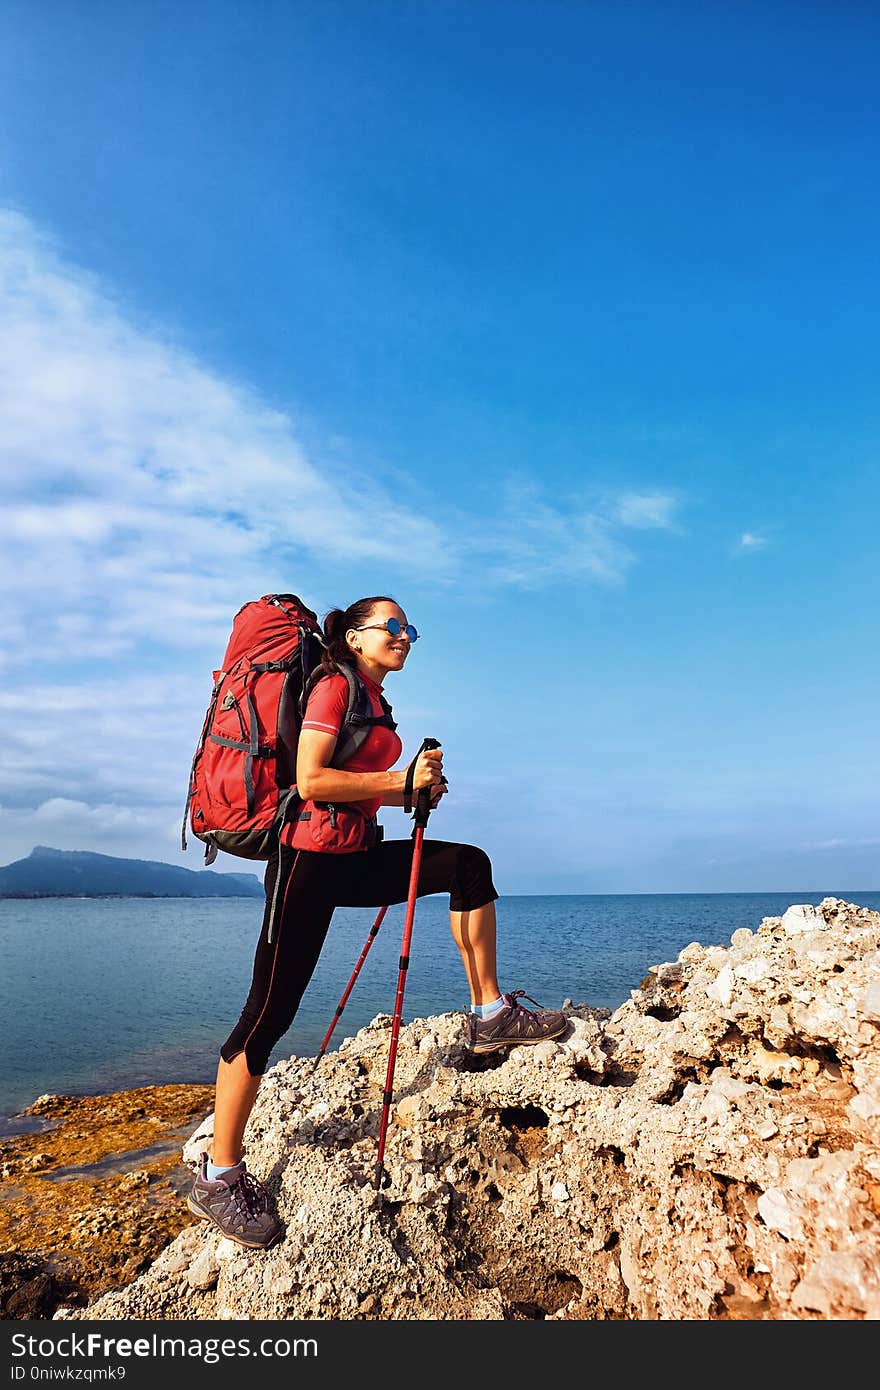 Hike along the coast of the Mediterranean Sea with a backpack and tent. Hike along the coast of the Mediterranean Sea with a backpack and tent